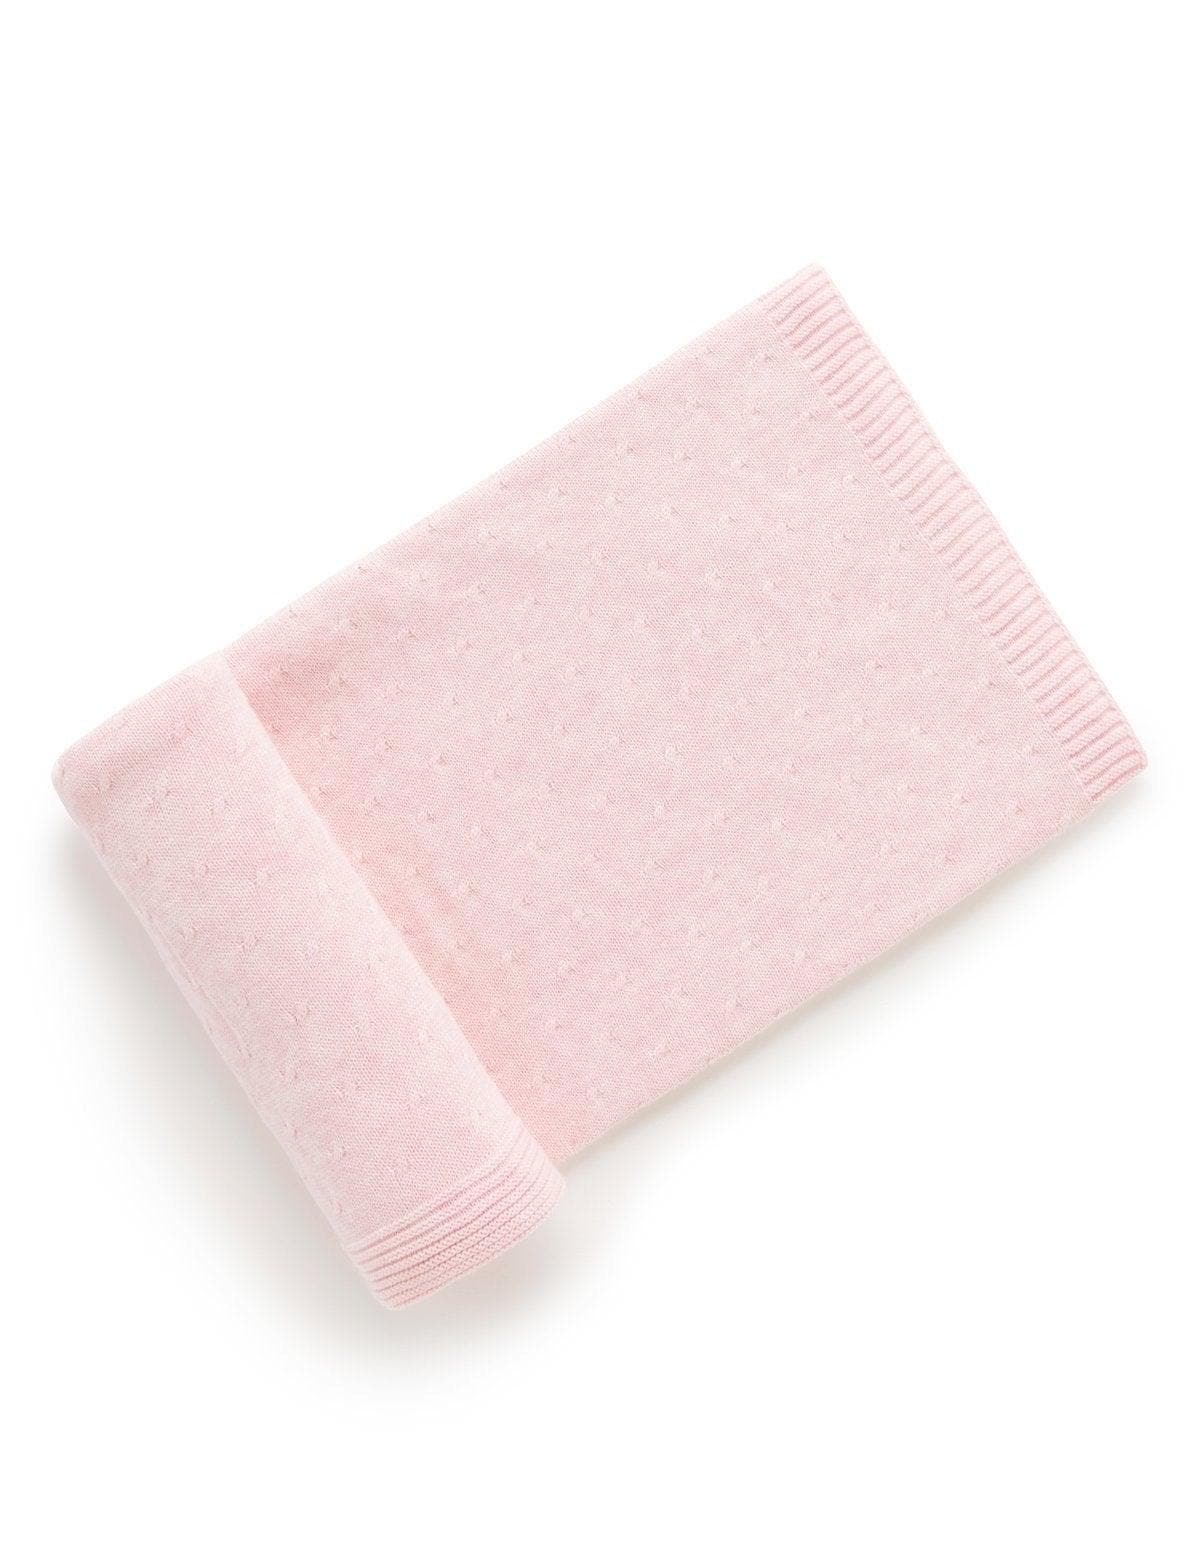 Purebaby Essentials Blanket in Pale Pink Melange